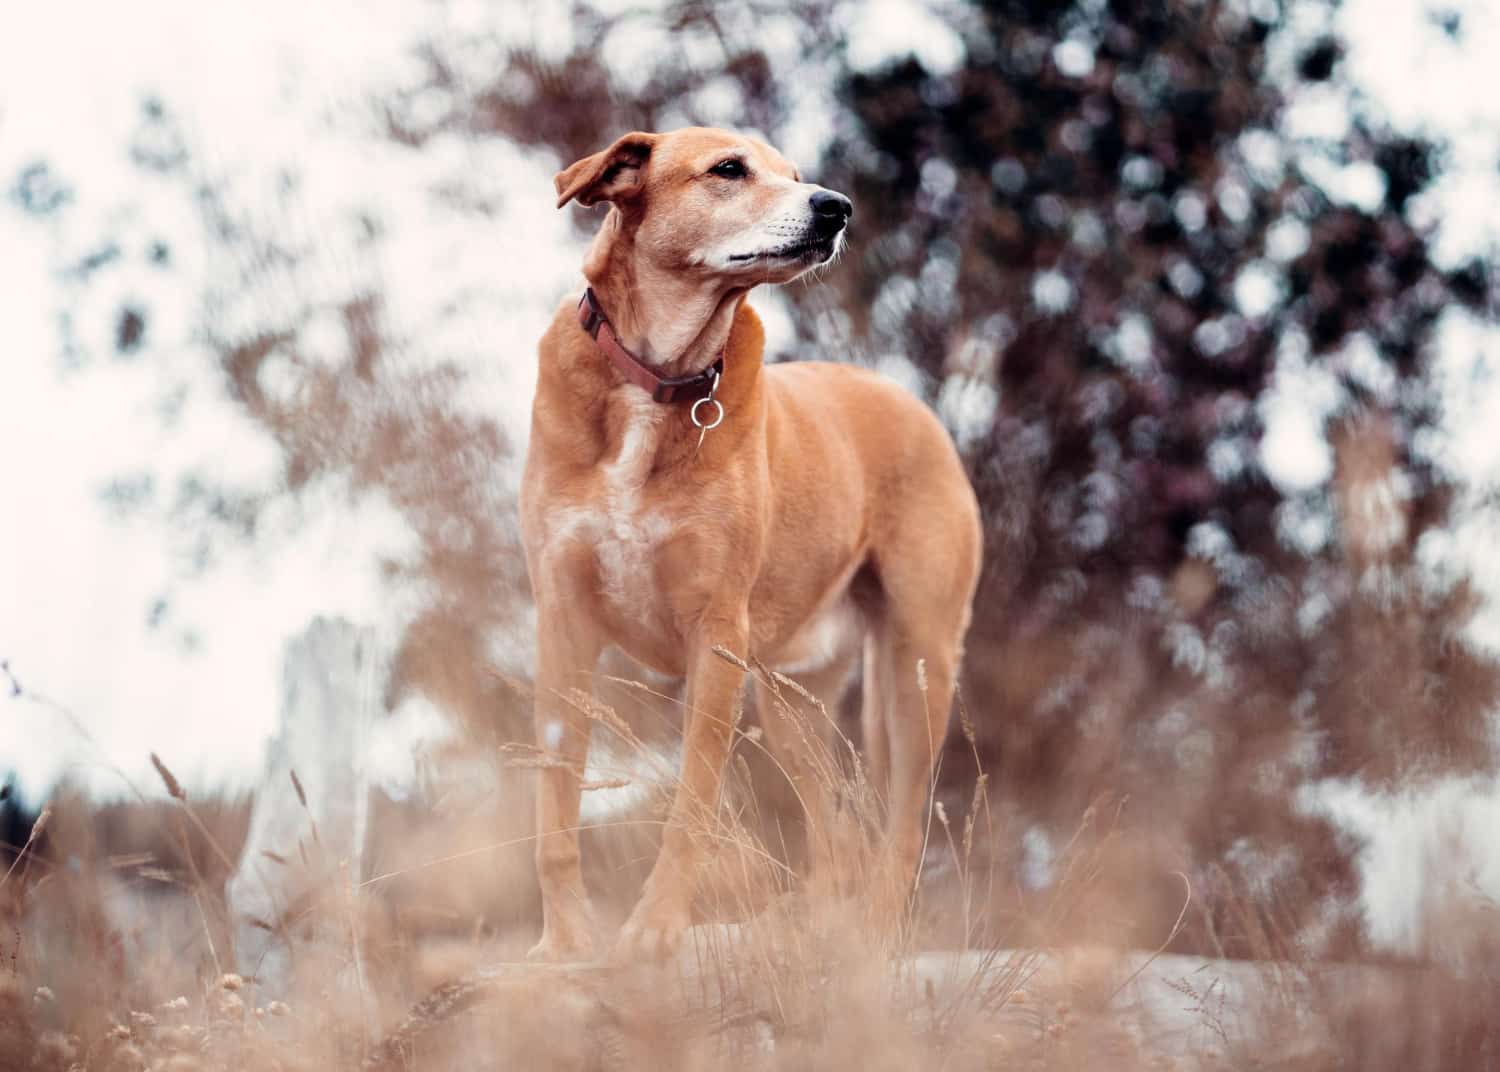 Perro de caza de porte majestuoso posando elegantemente para la cámara.